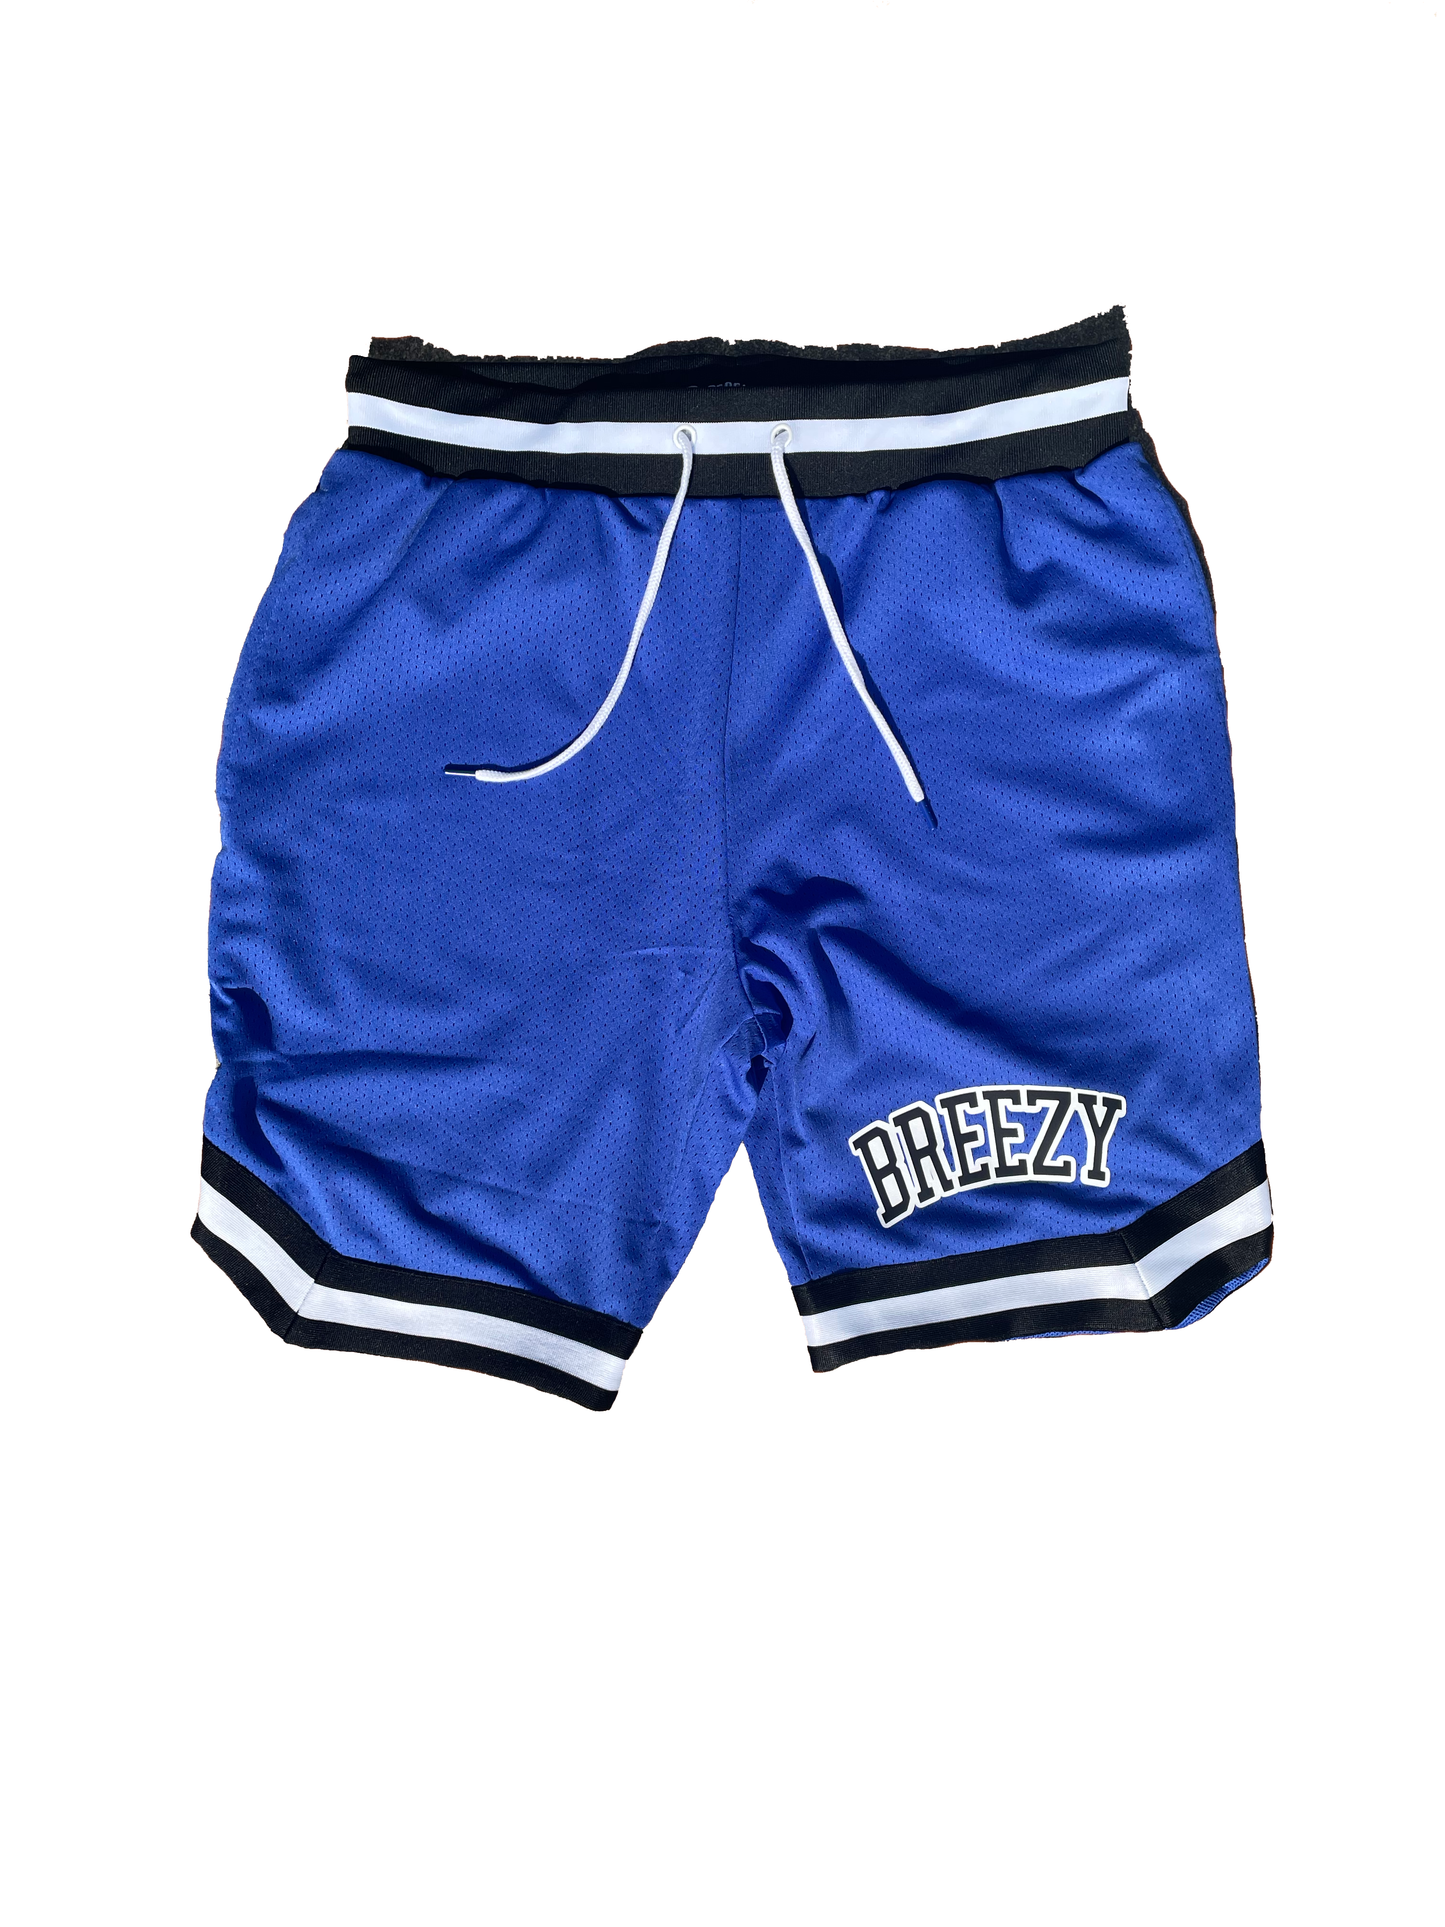 Royal Blue Basketball Shorts - Breezy Season 